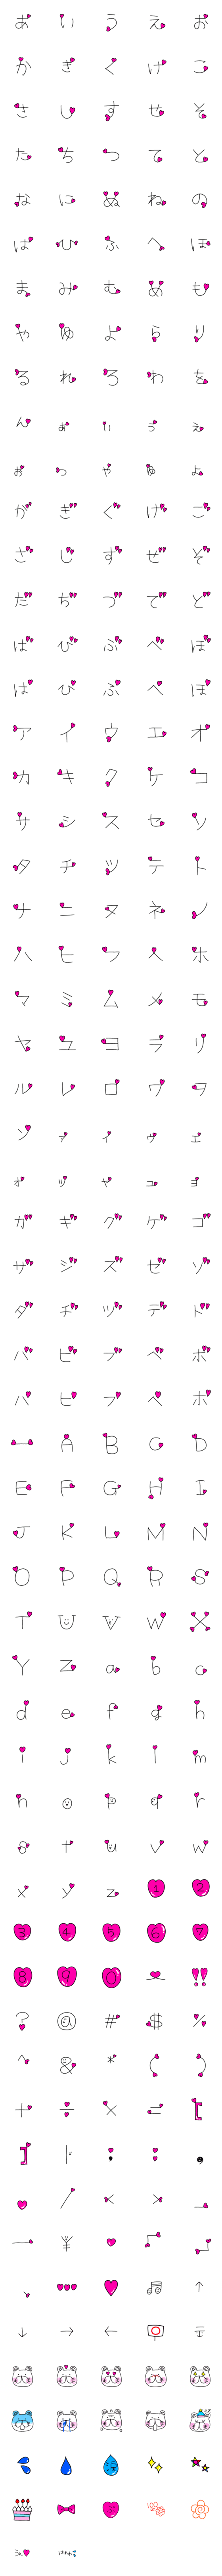 [LINE絵文字]くま姫の基本絵文字〜287個の大量絵文字〜の画像一覧